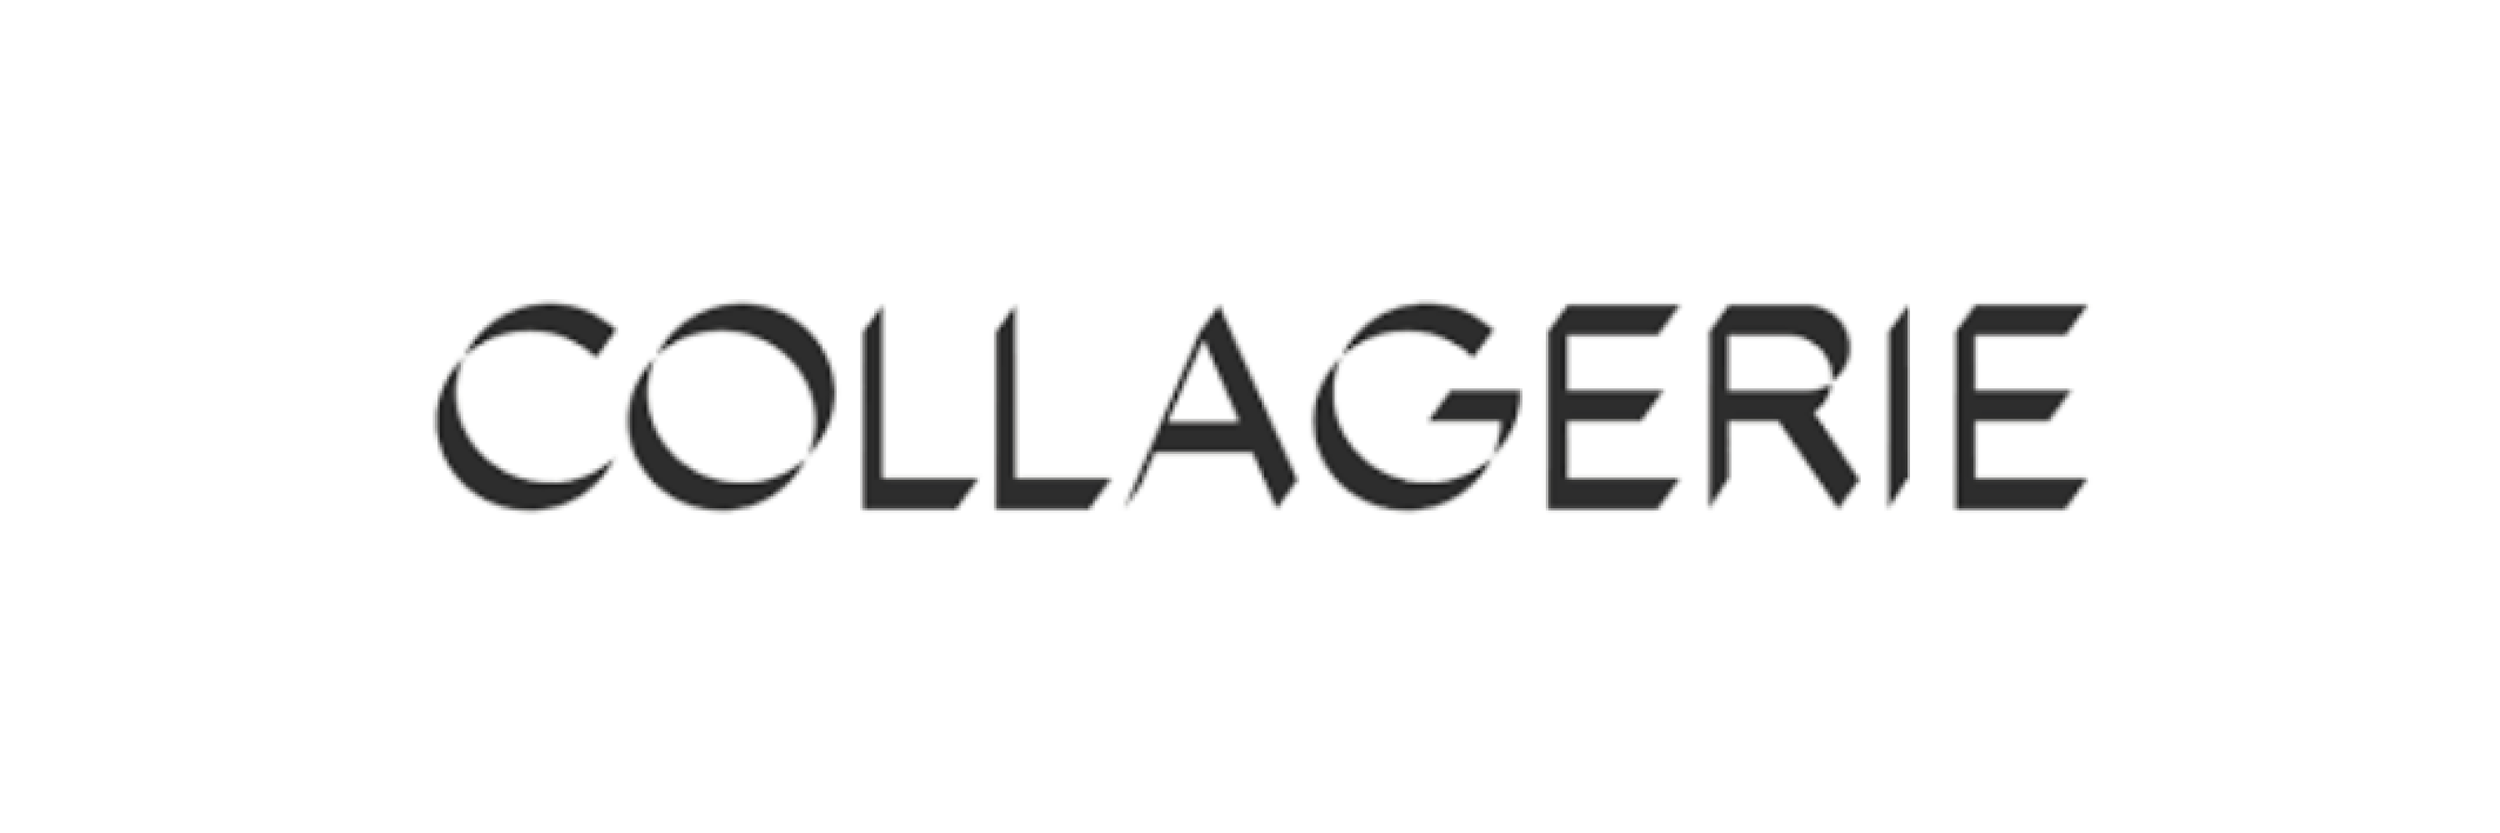 Collagerie Logo_medium.png